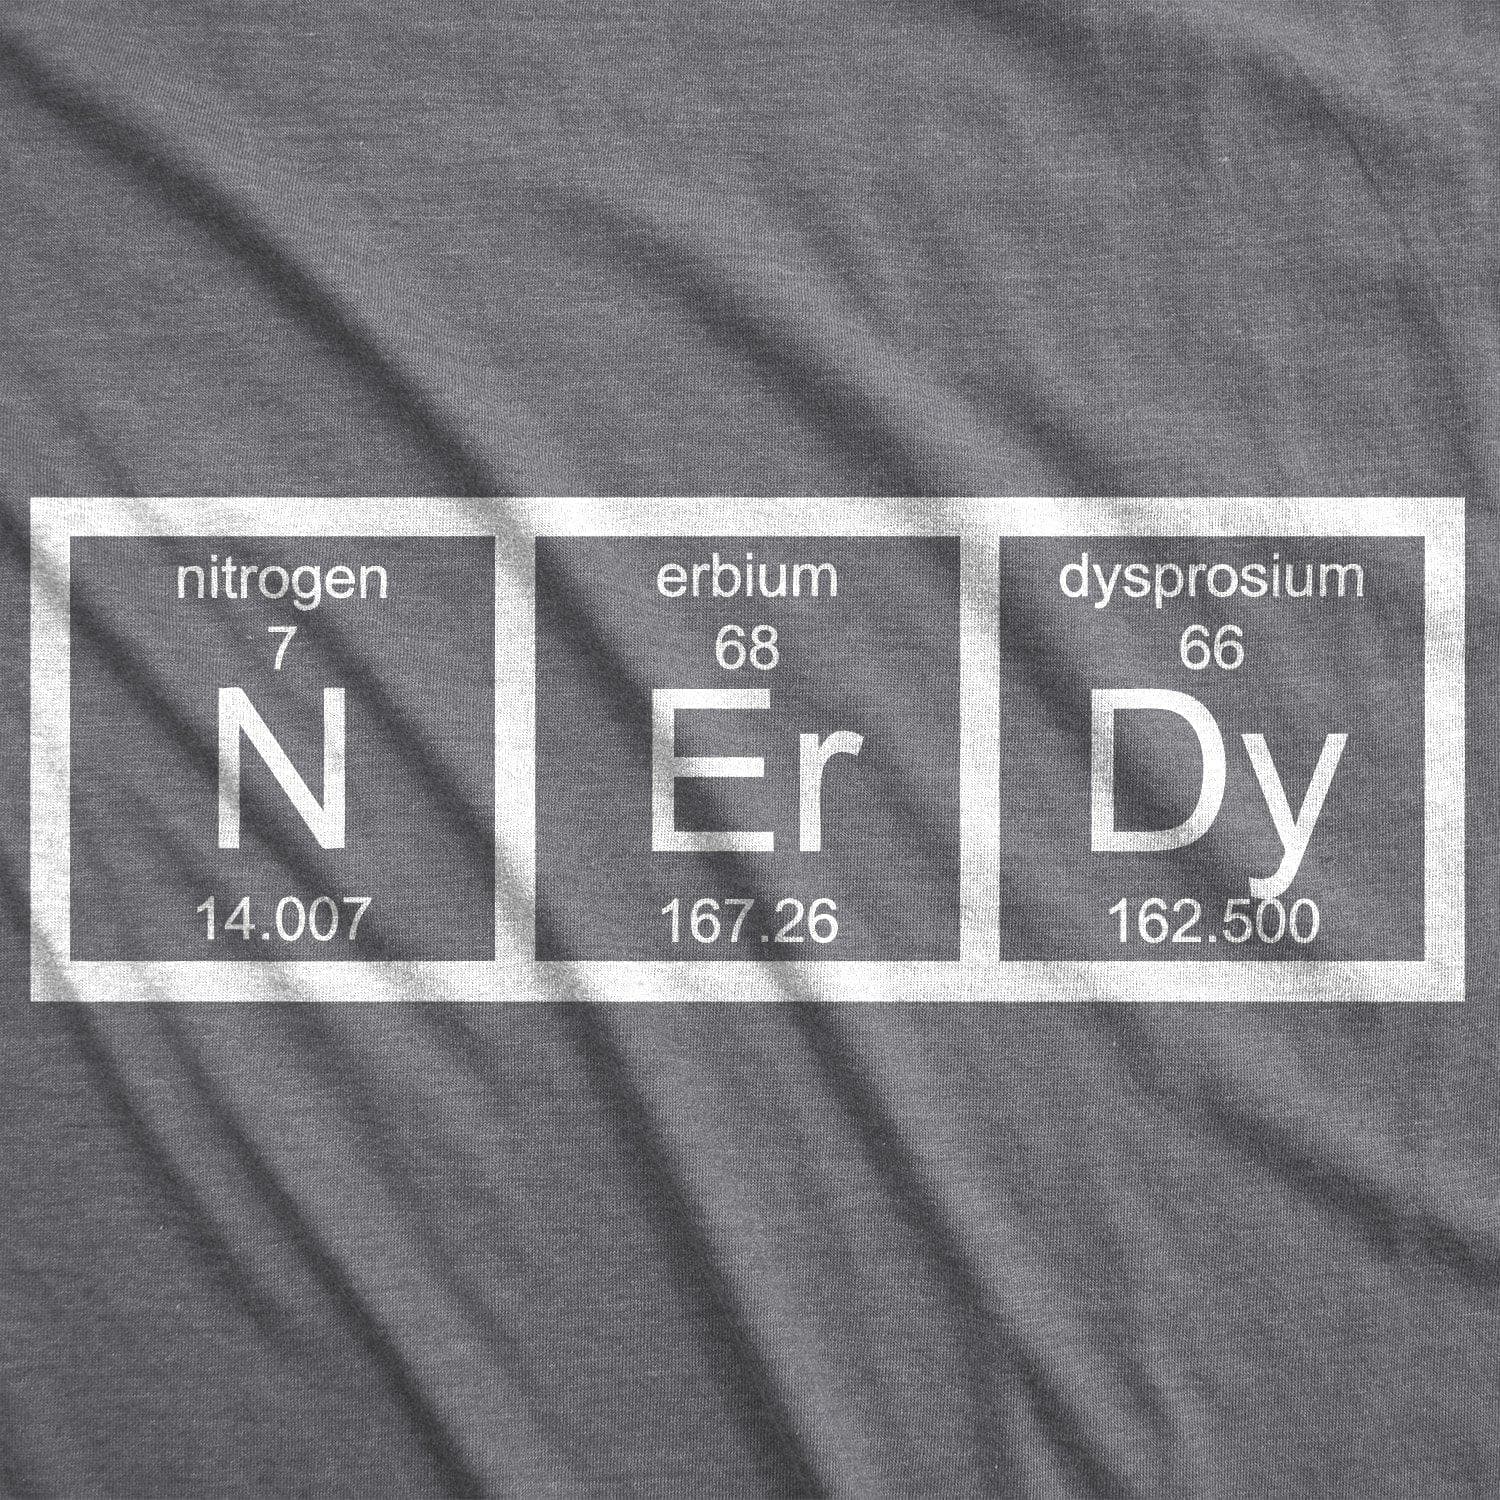 Element of Nerdy Men's Tshirt - Crazy Dog T-Shirts